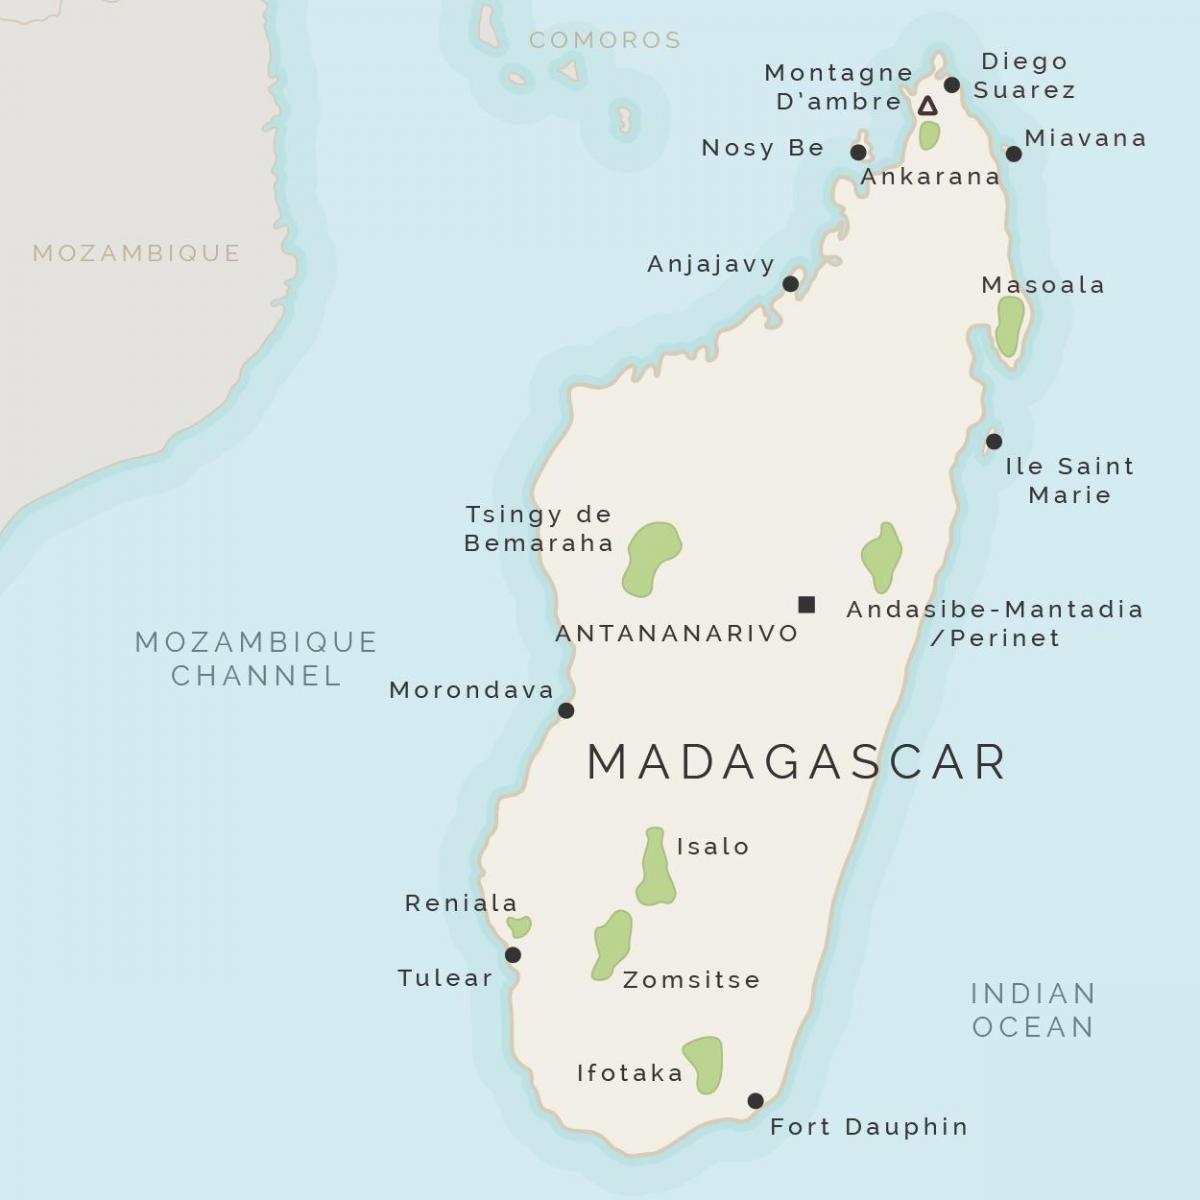 kaart van Madagascar en de omliggende eilanden